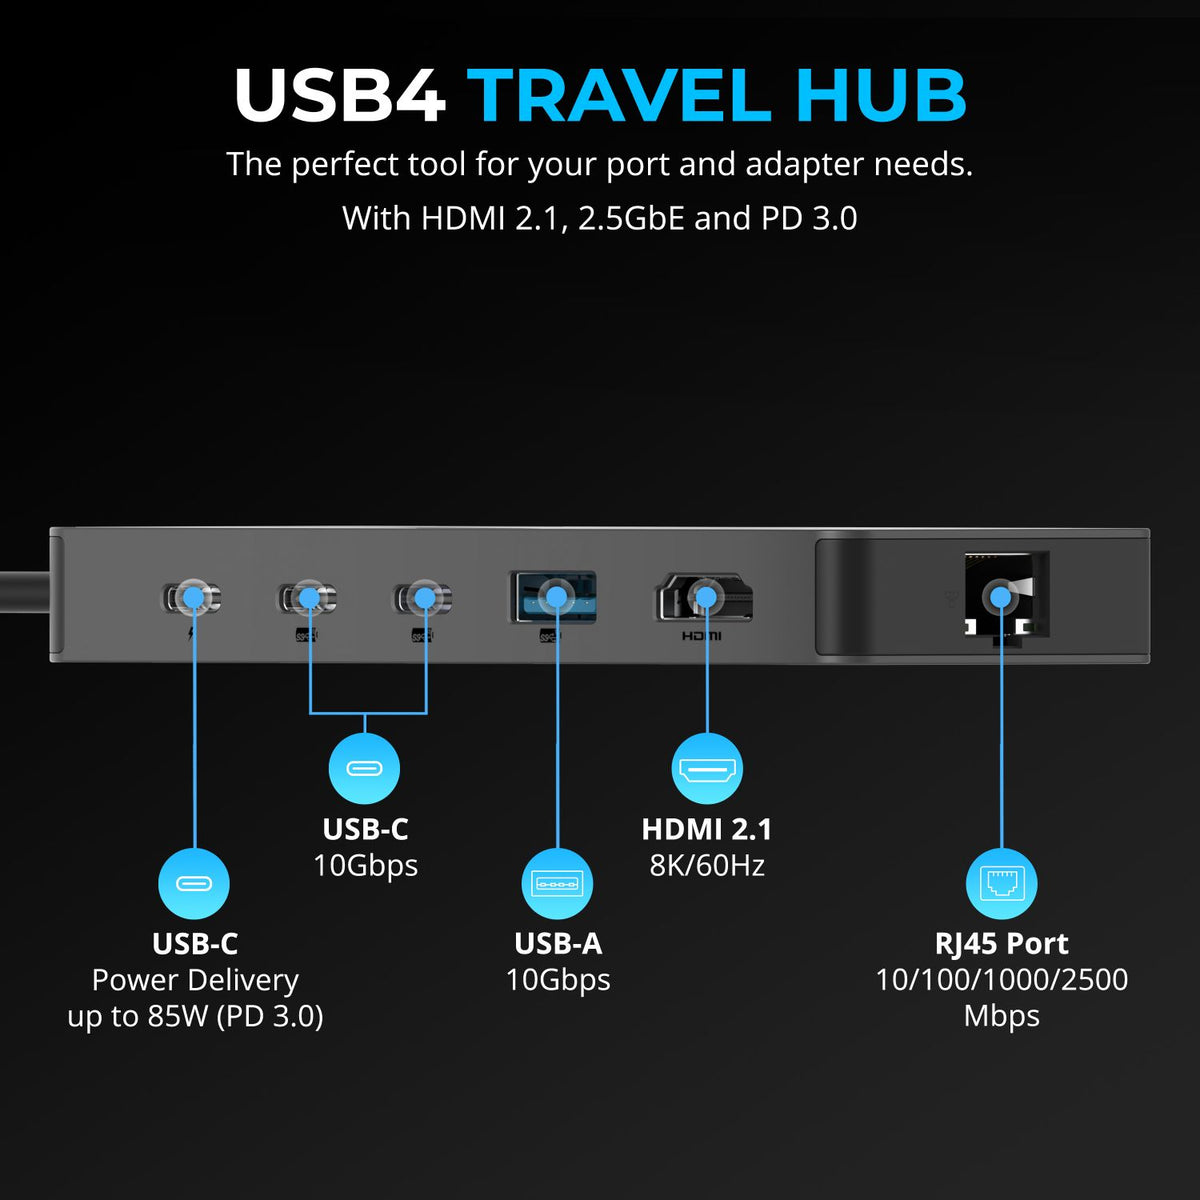 USB4 Travel Hub